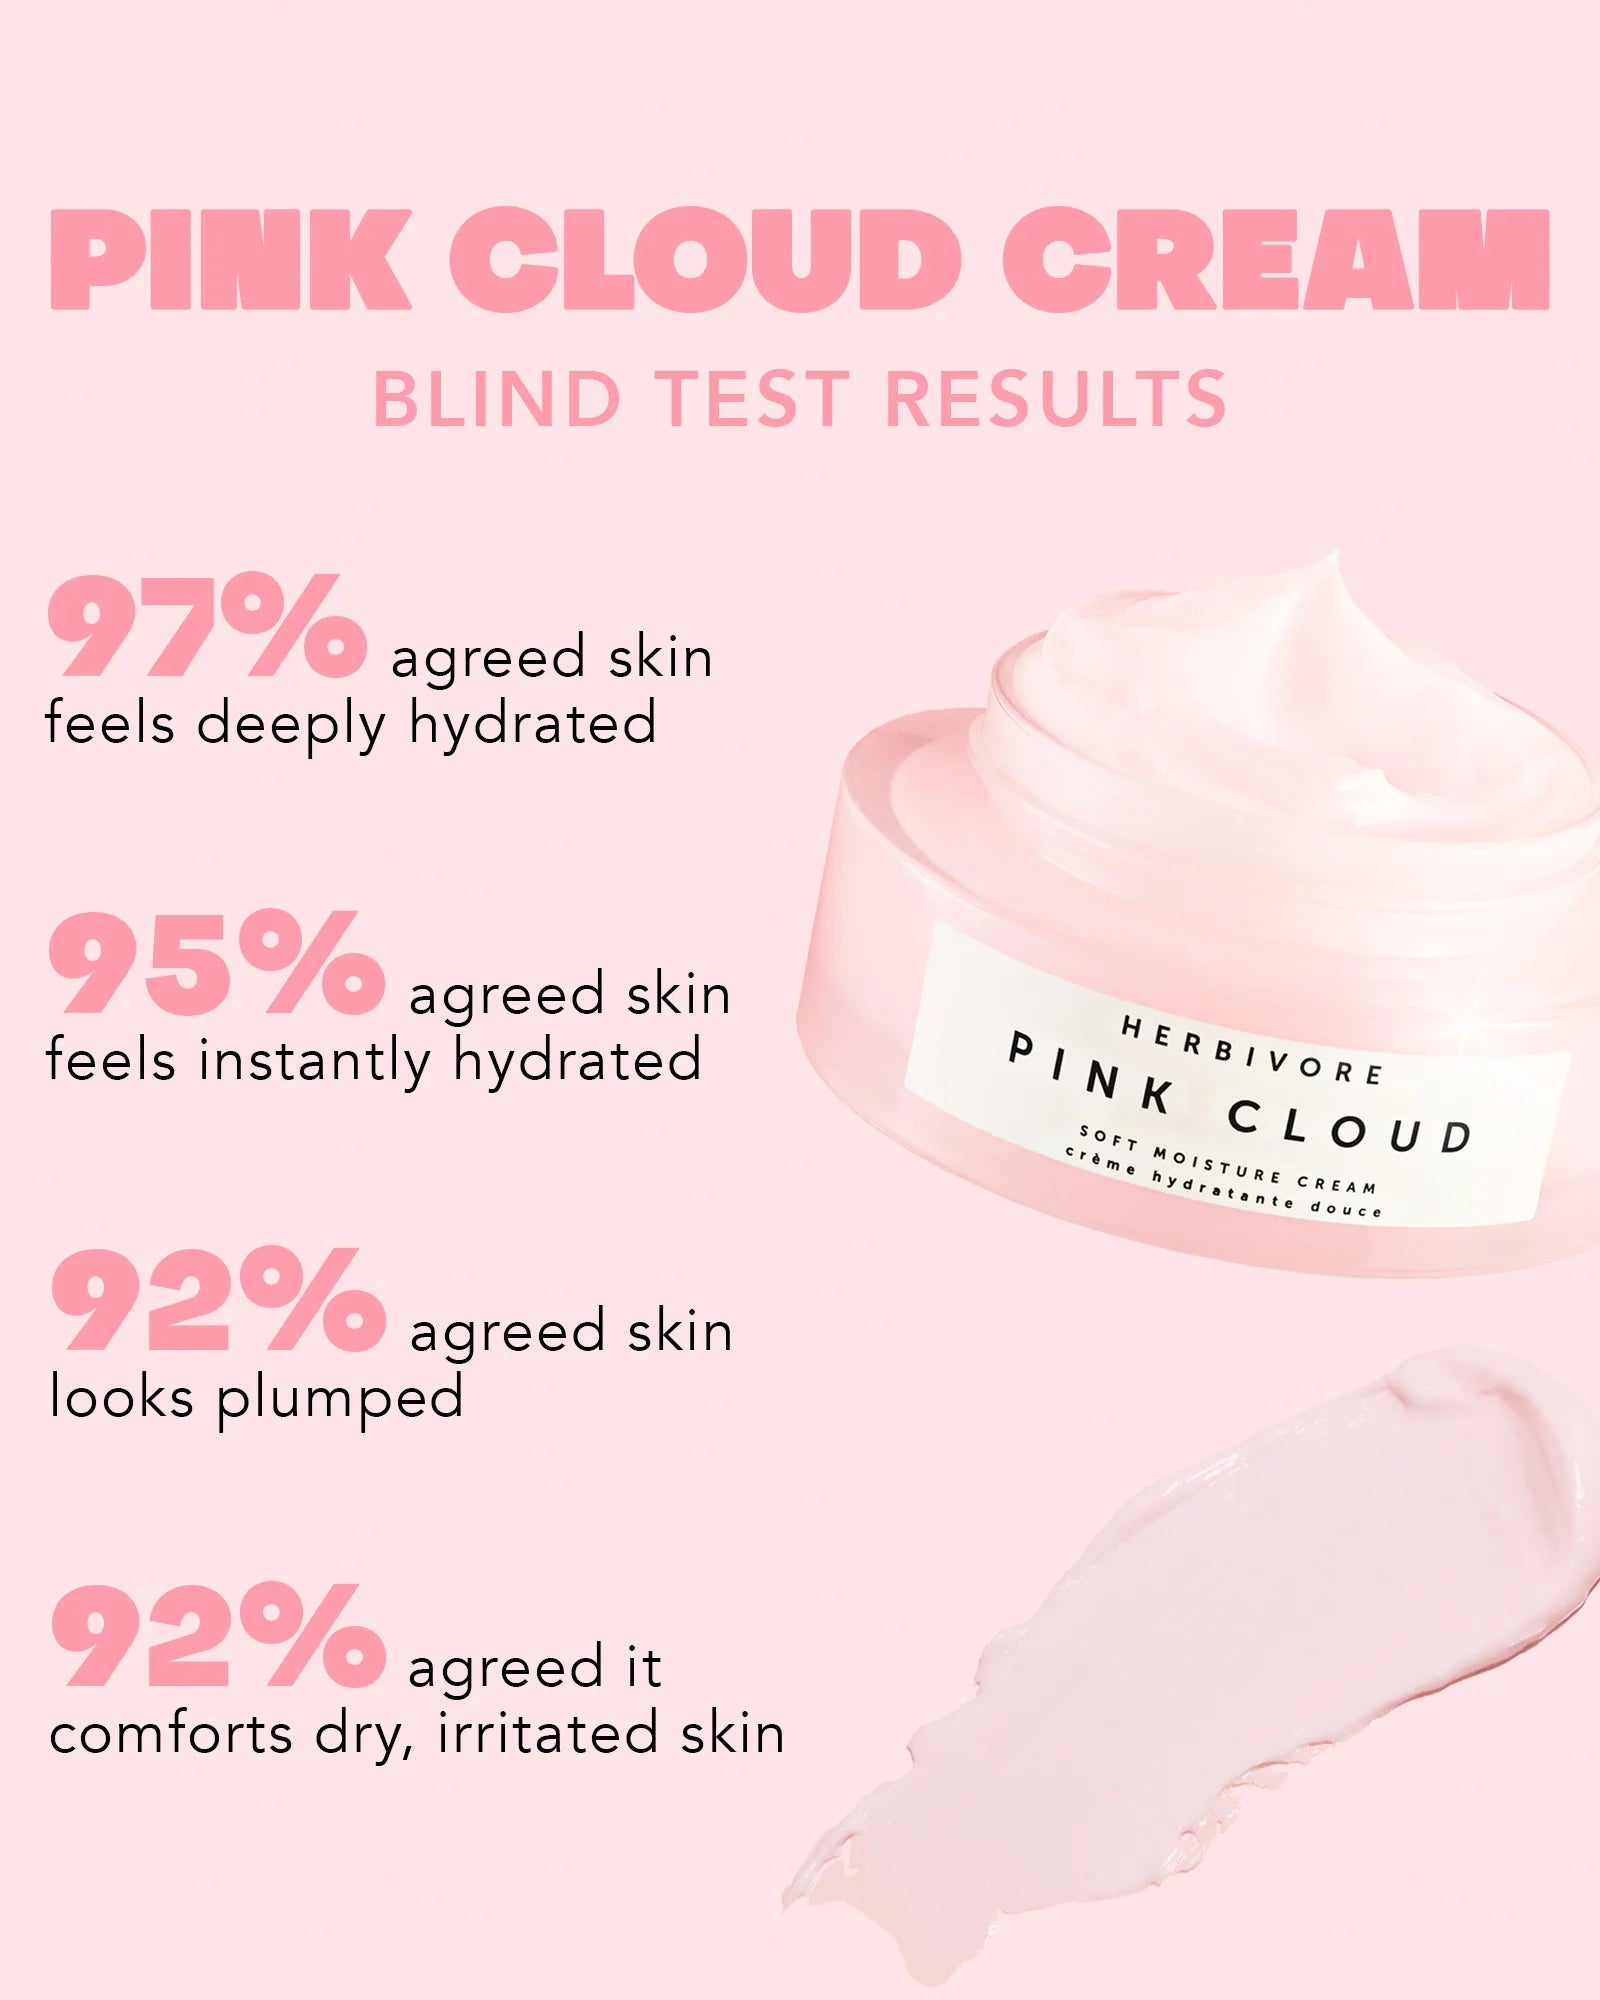 Herbivore Pink Cloud Soft Moisture Cream